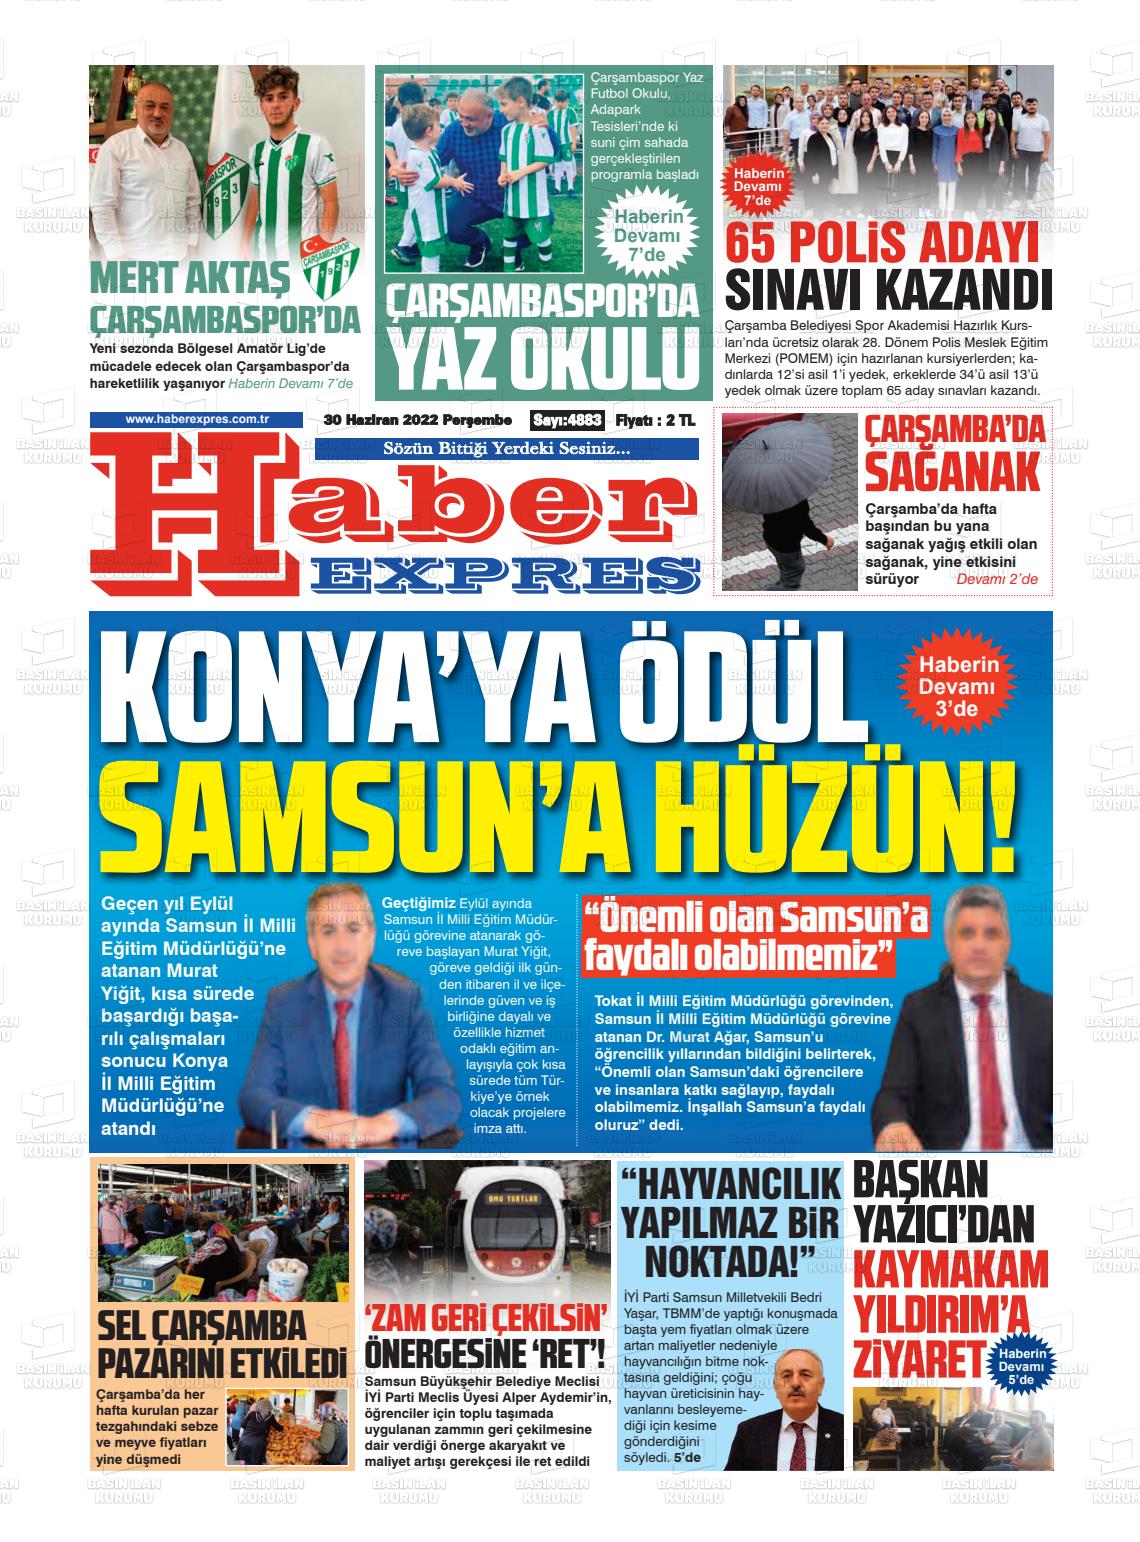 30 Haziran 2022 Haber Expres Gazete Manşeti